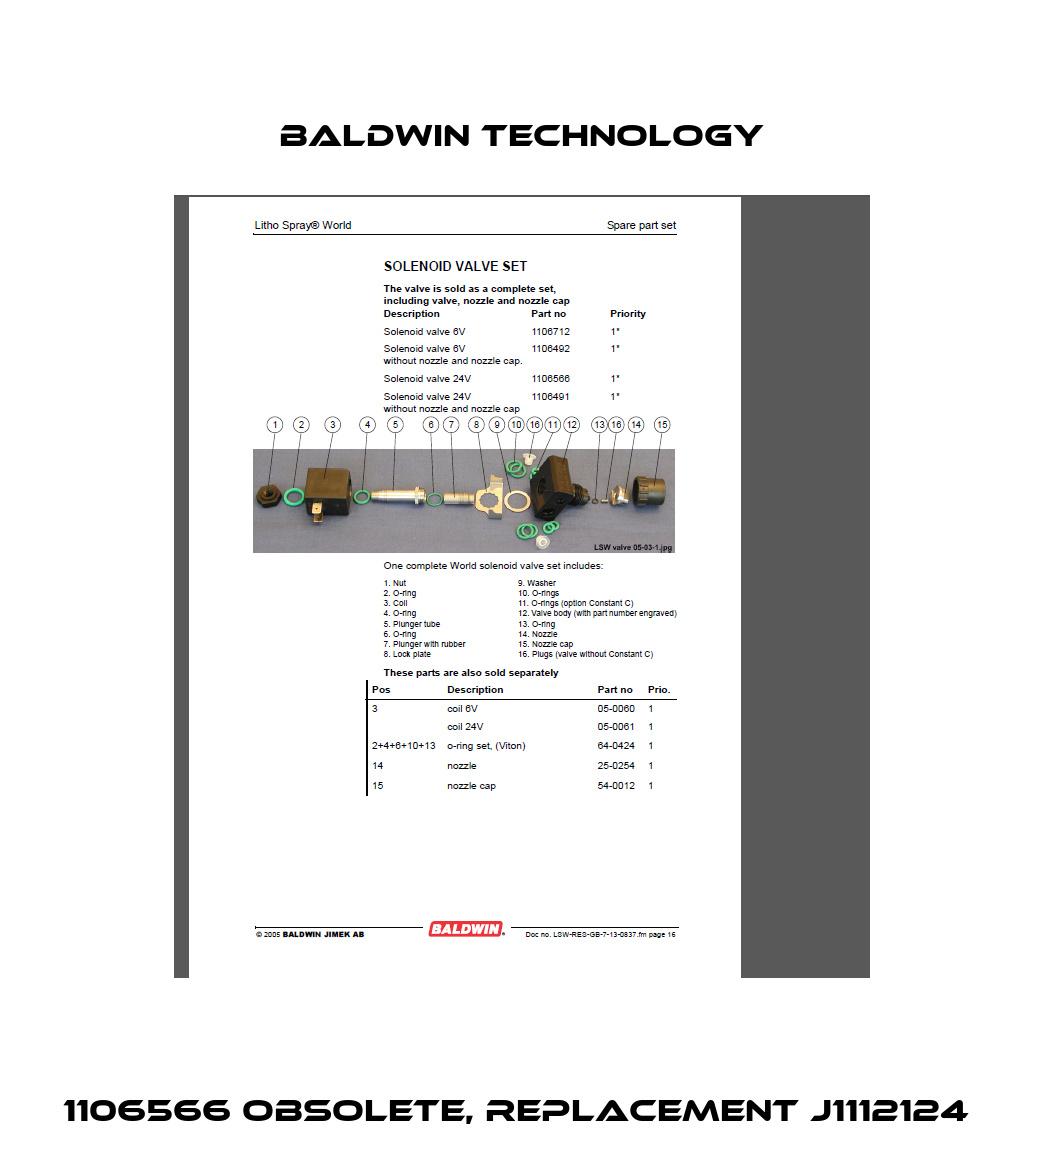 1106566 obsolete, replacement J1112124  Baldwin Technology